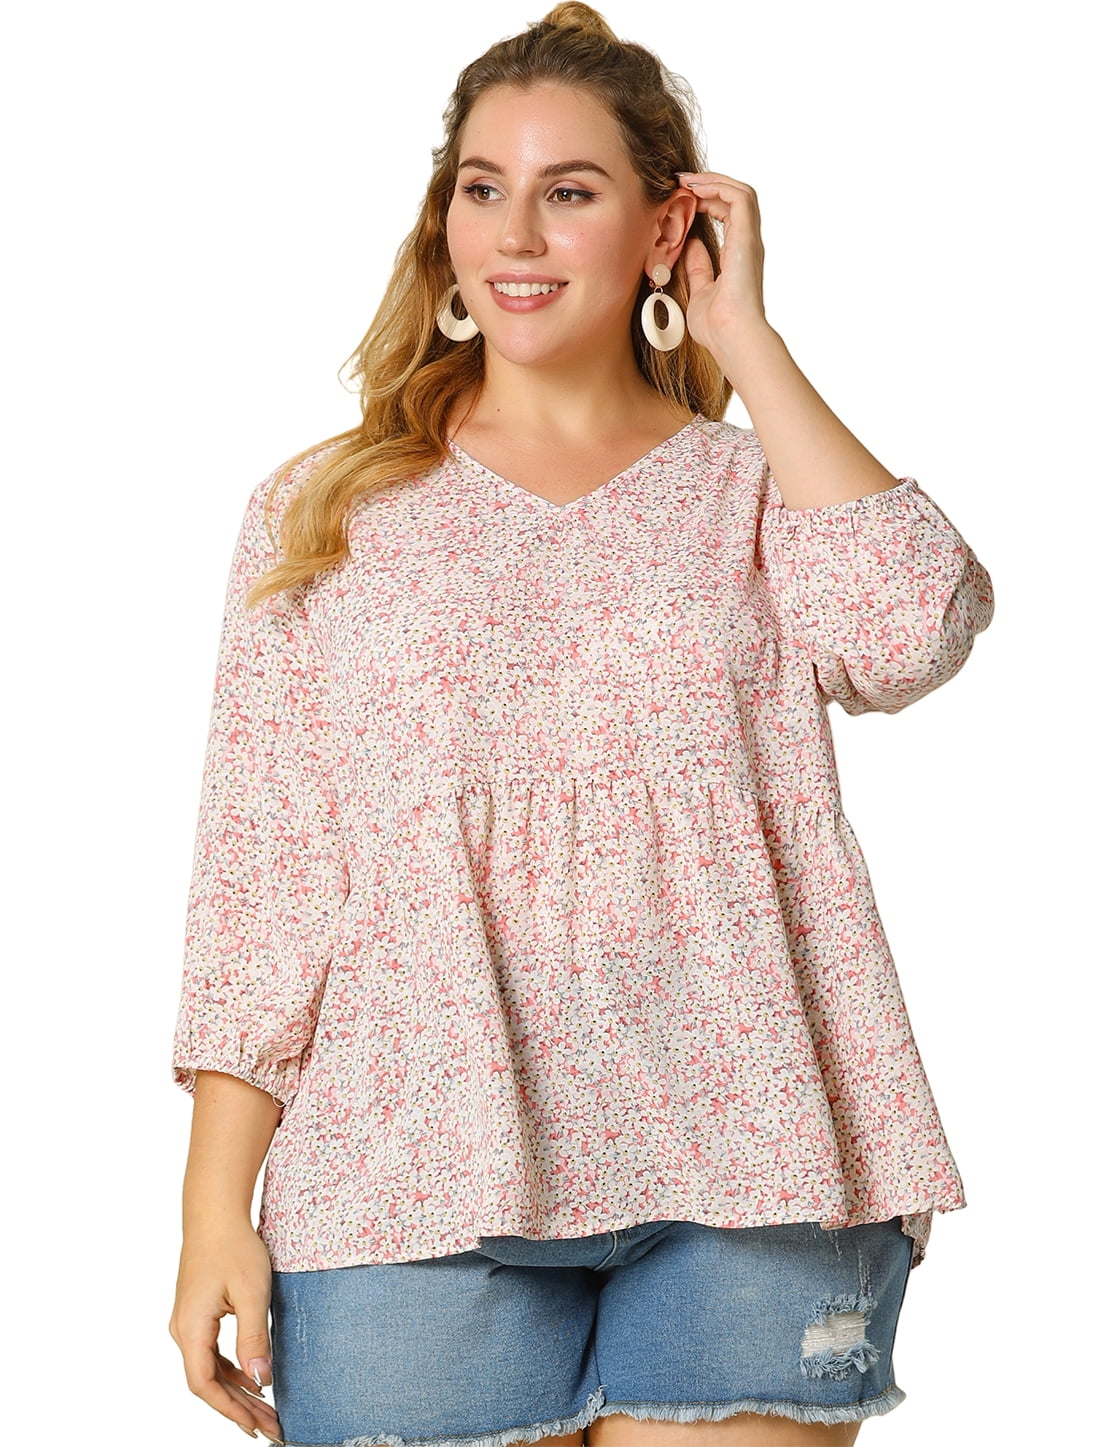 Women's Plus Size Tops Floral Ruffle Flowy Peplum Top 1X Pink | Walmart ...